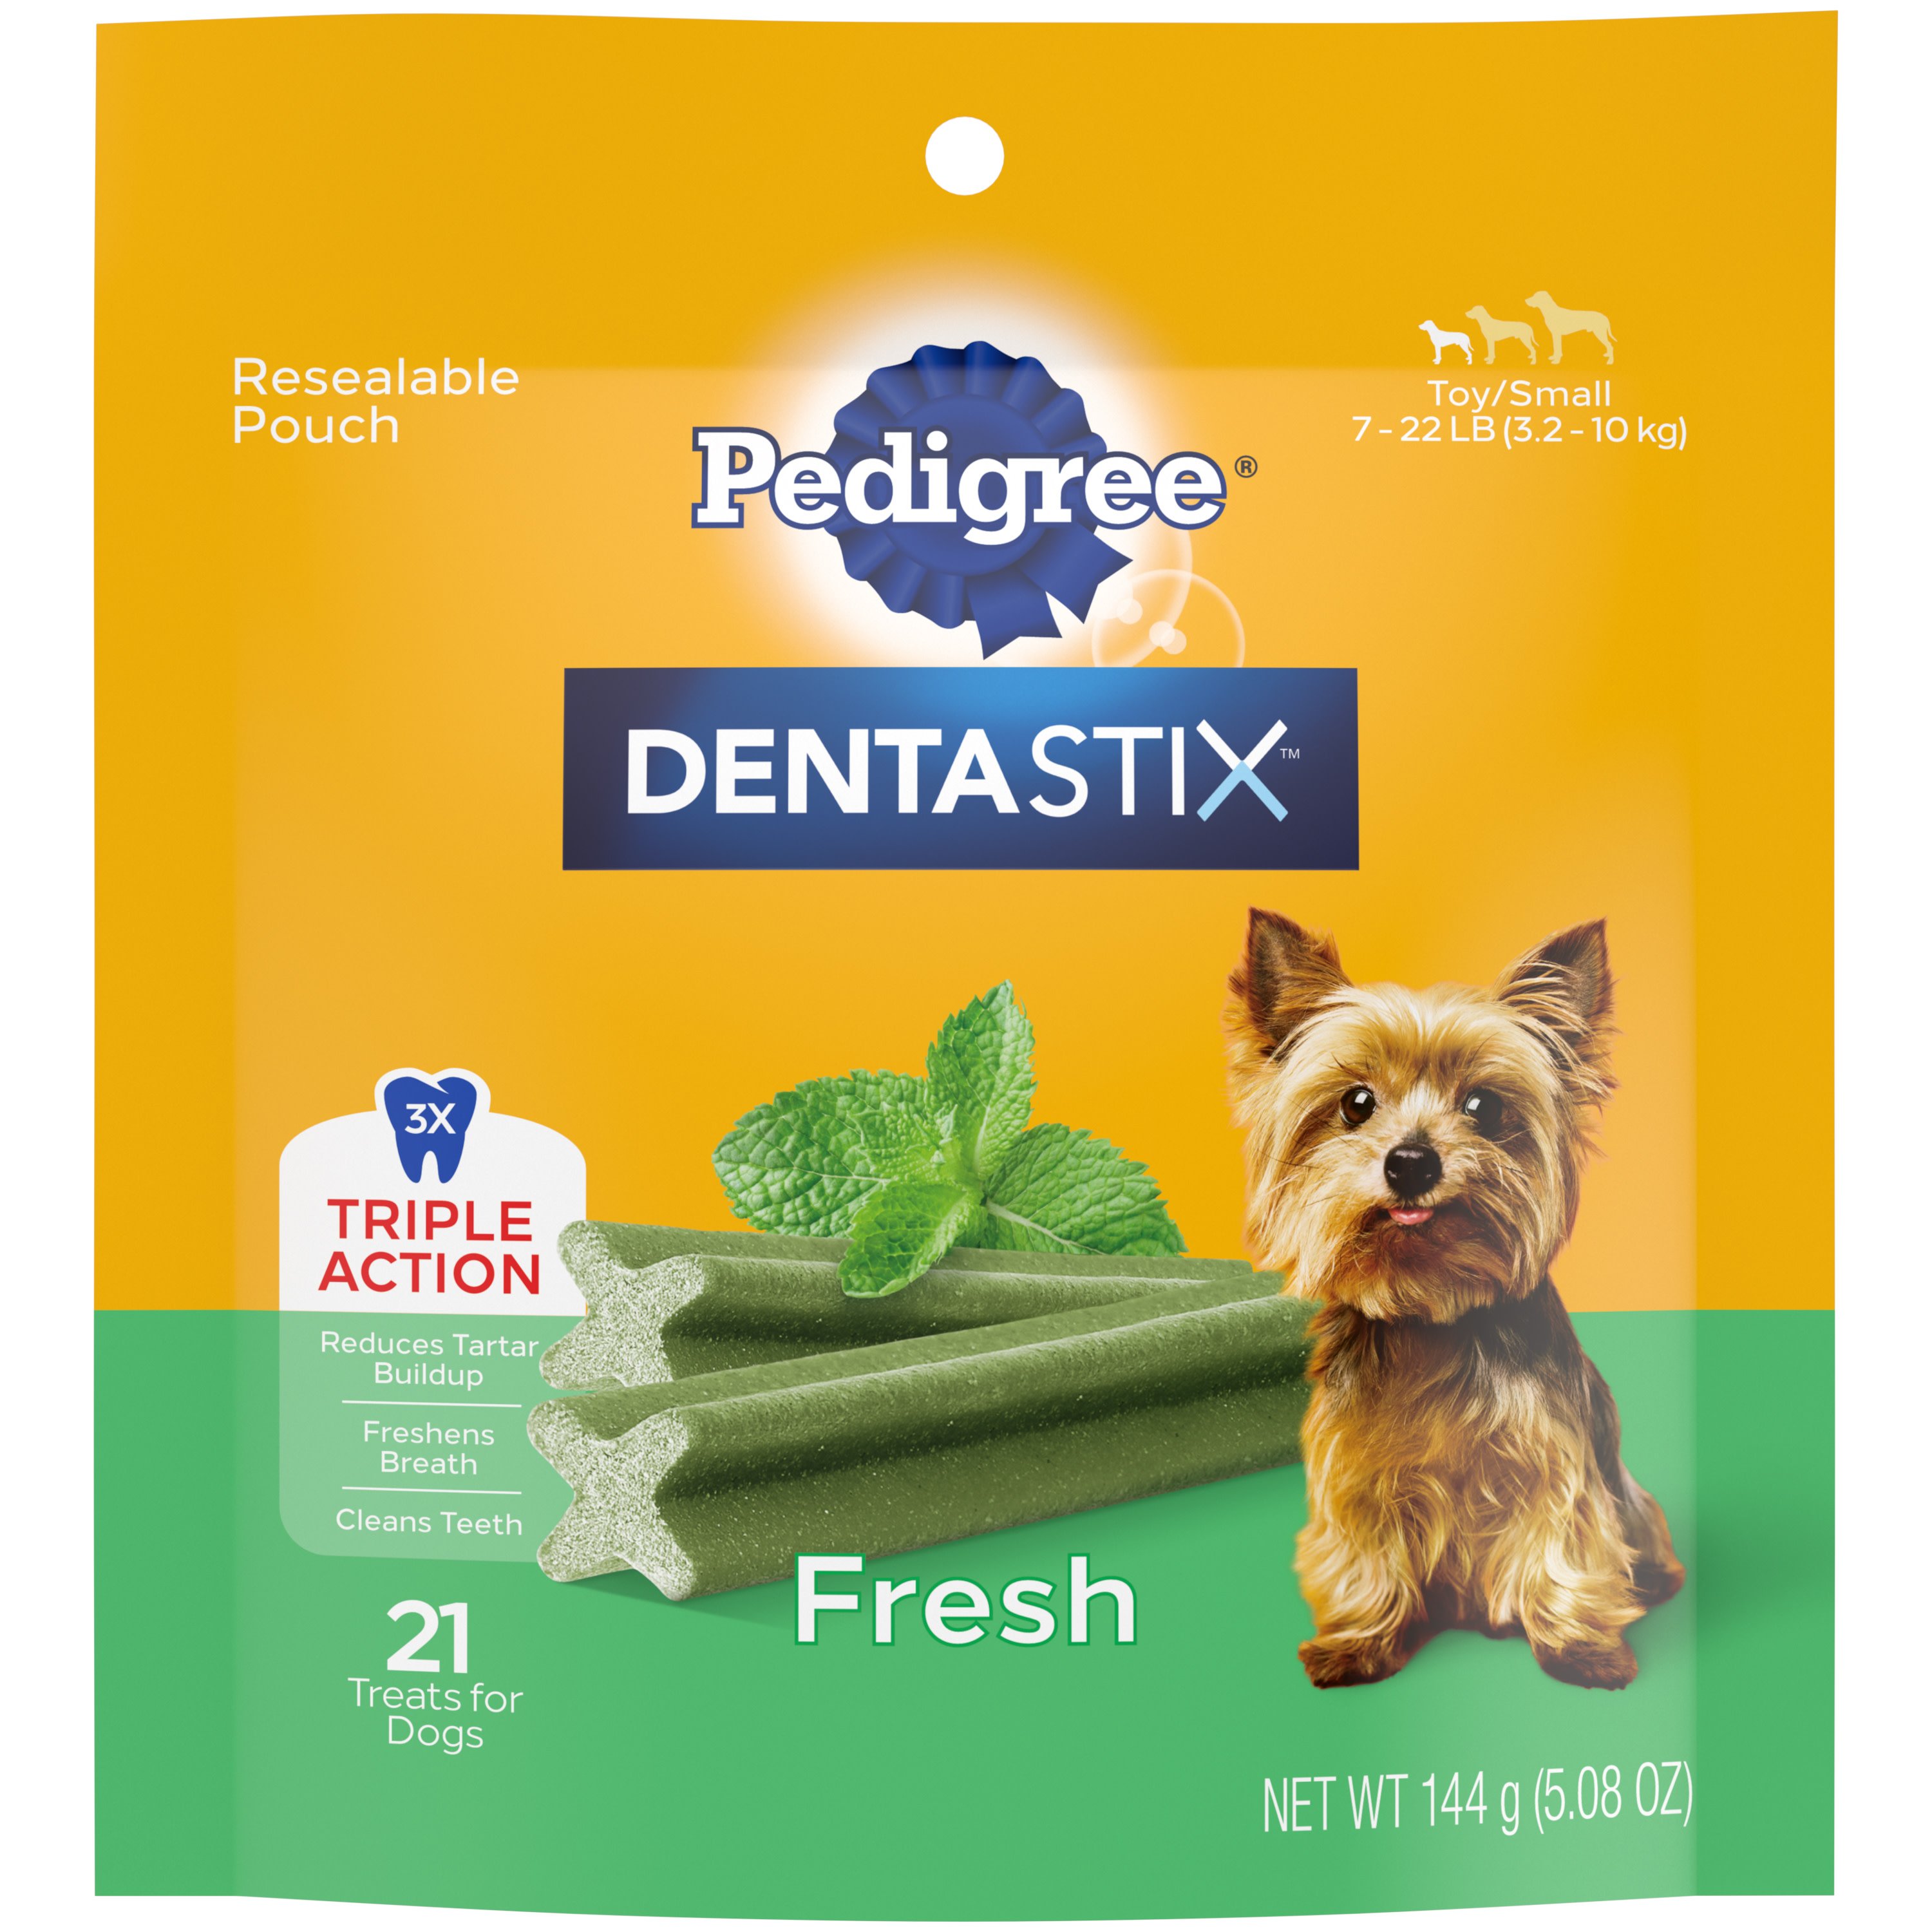 Pedigree Dentastix Daily Oral Care Toy Small Dog Treats Shop